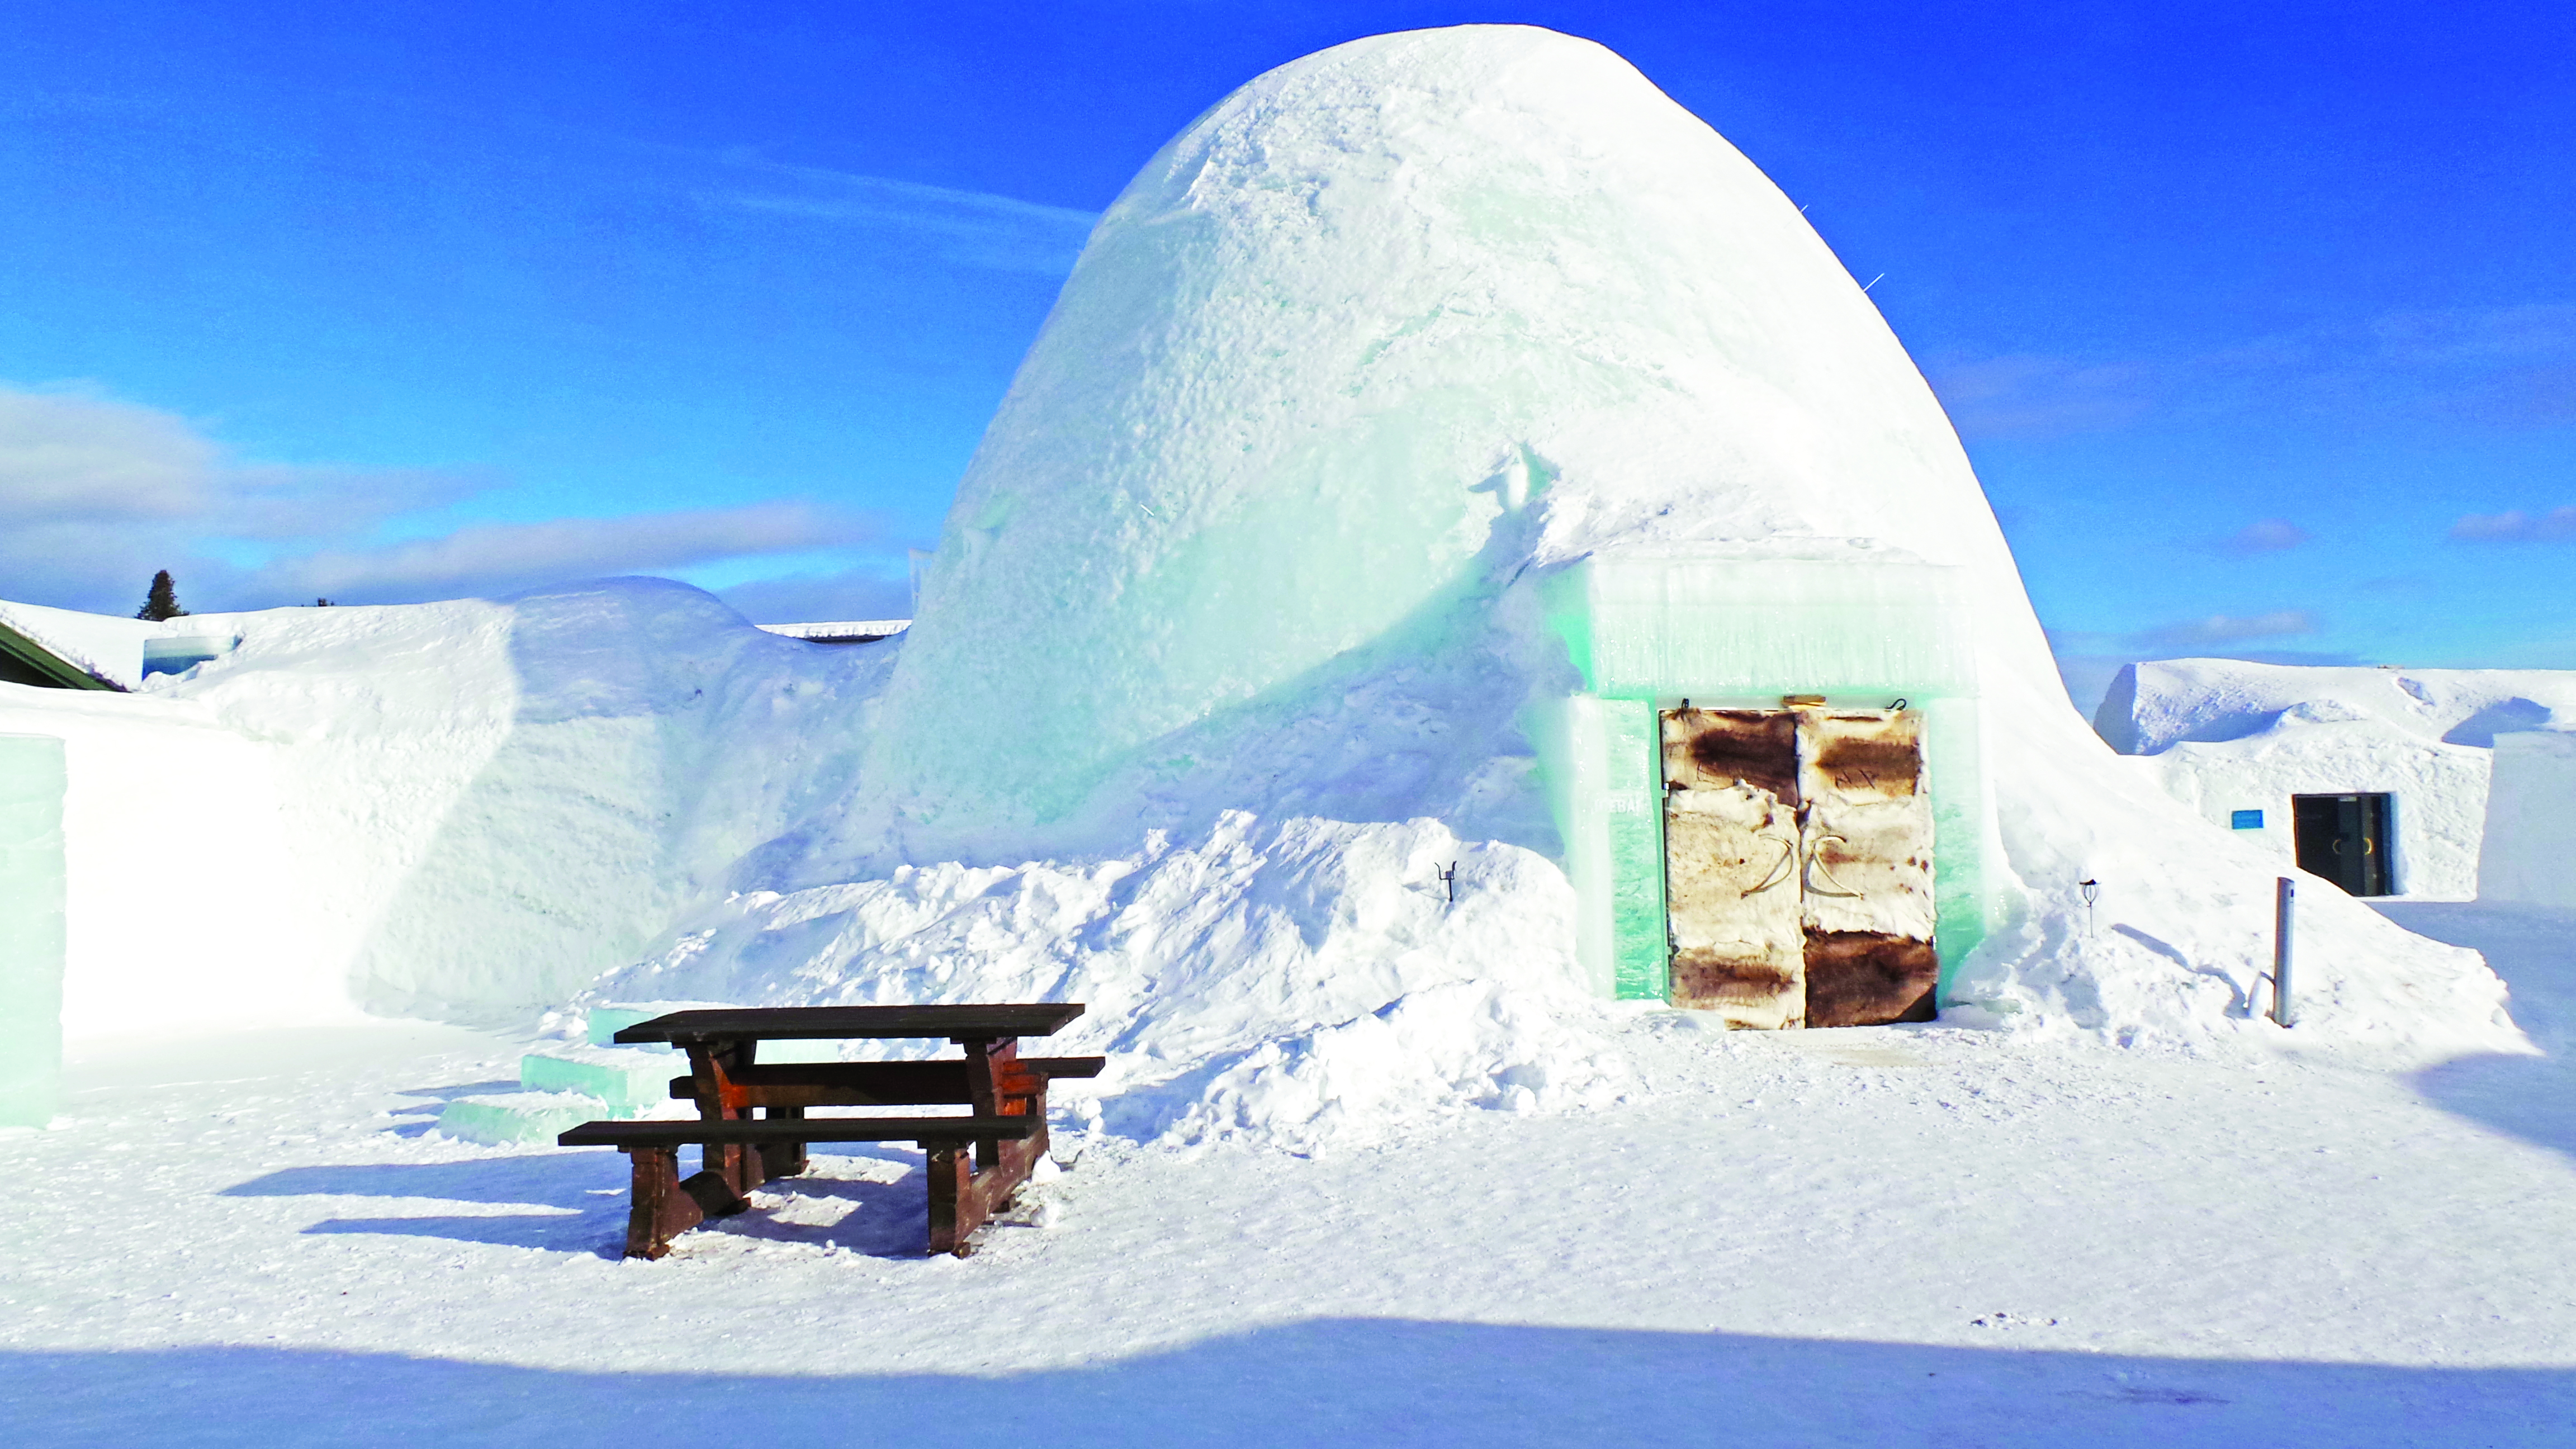 Visit Ice Hotel in North Sweden